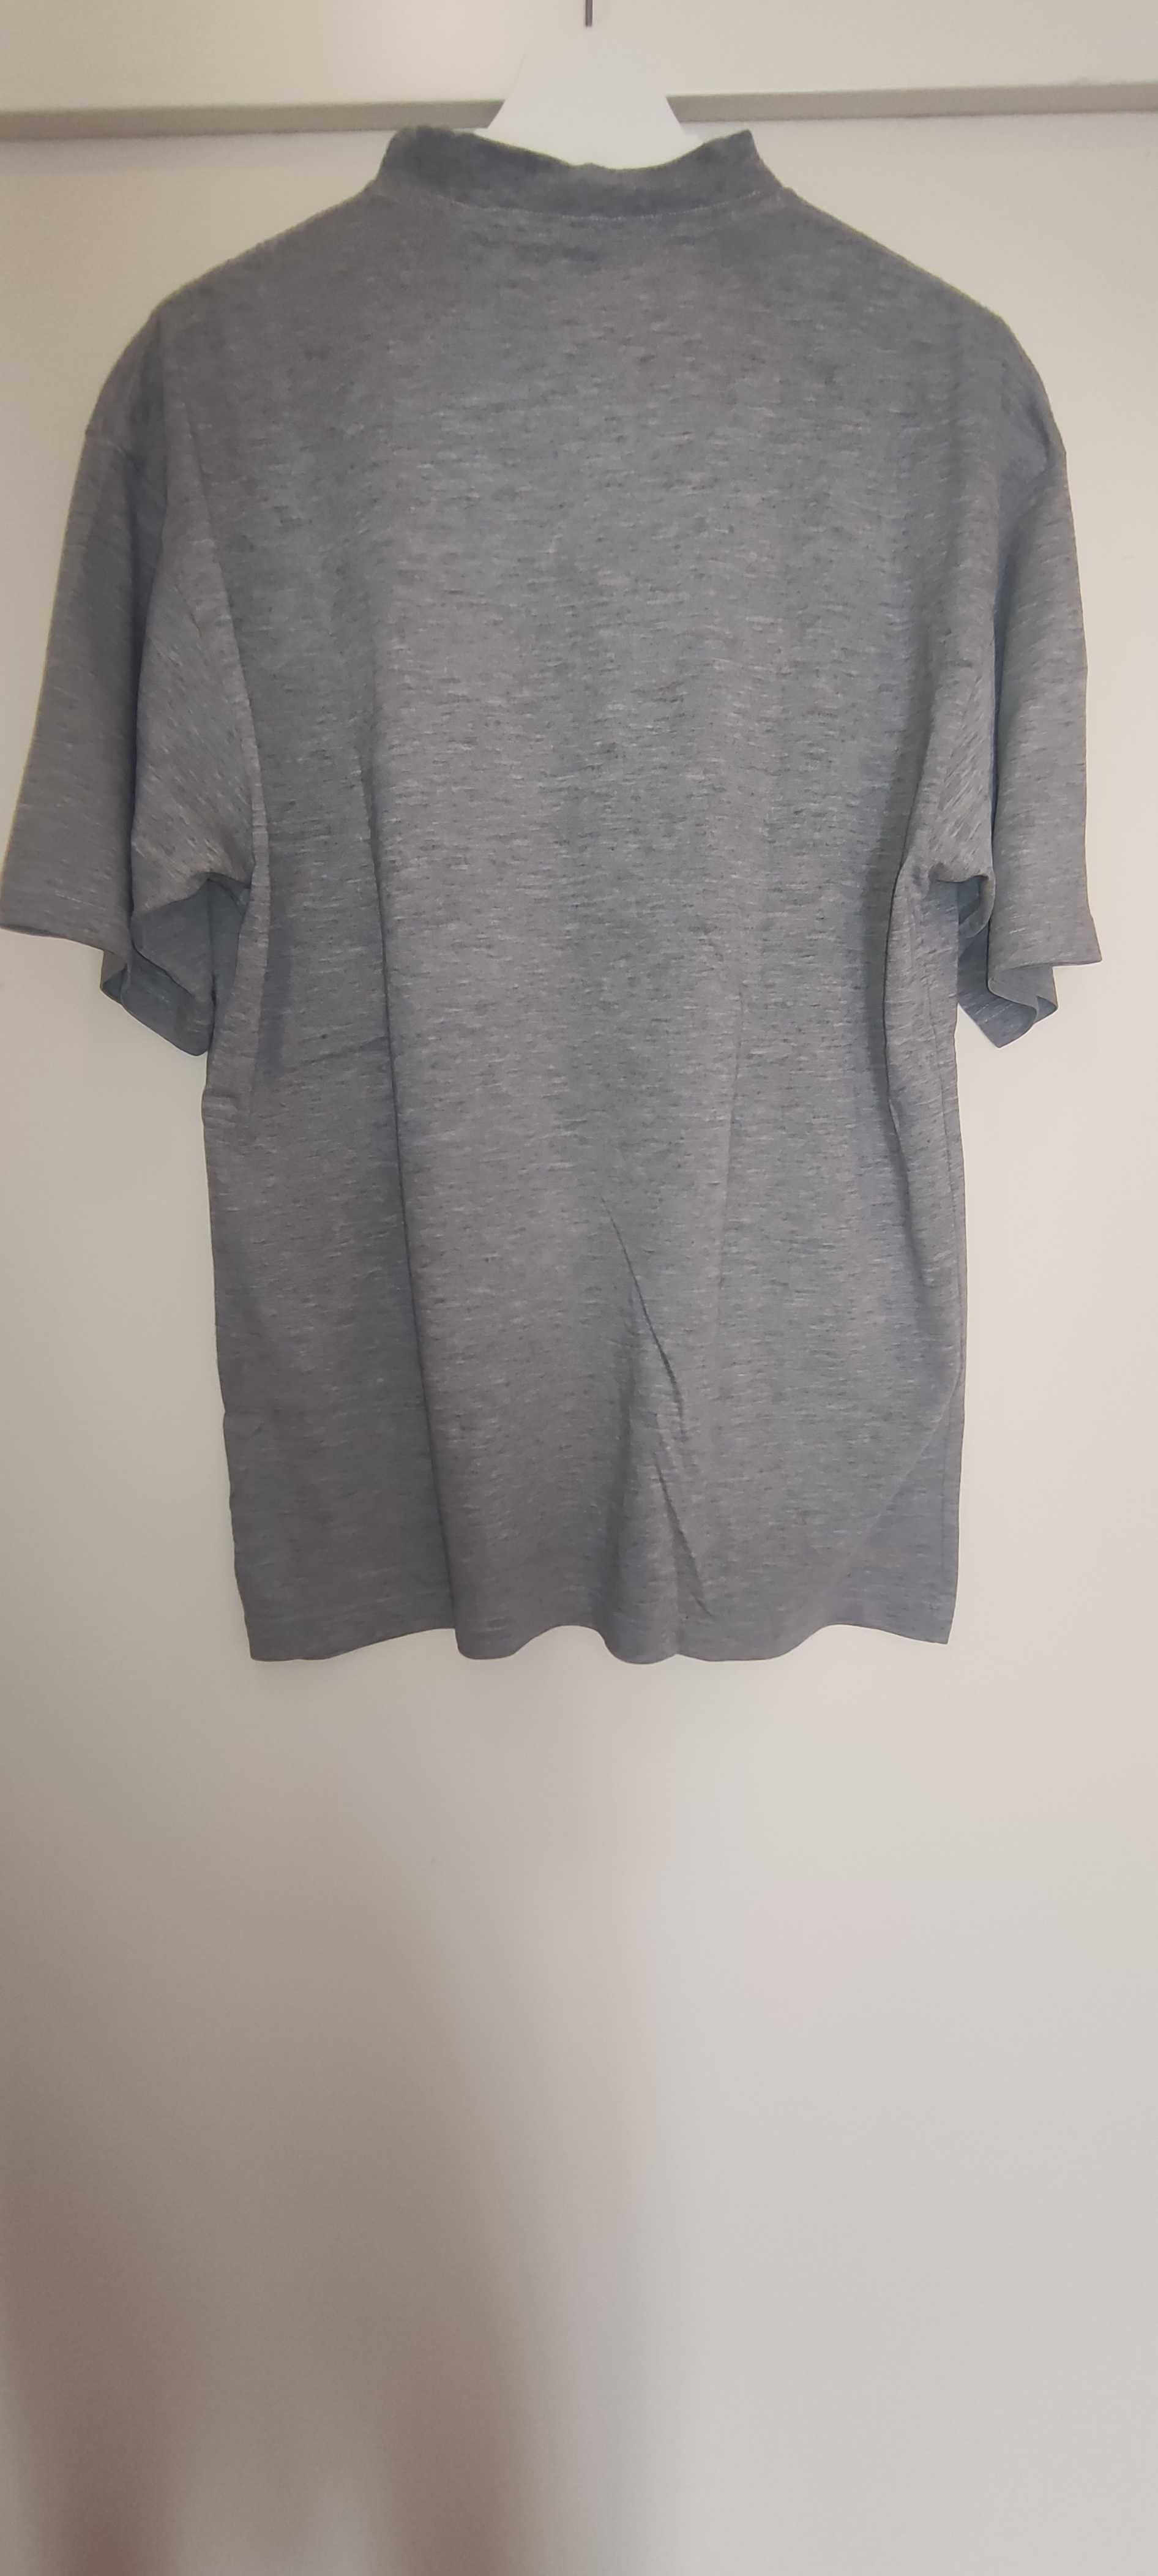 T-shirt vintage Hang Loose 100% algodão Tam M